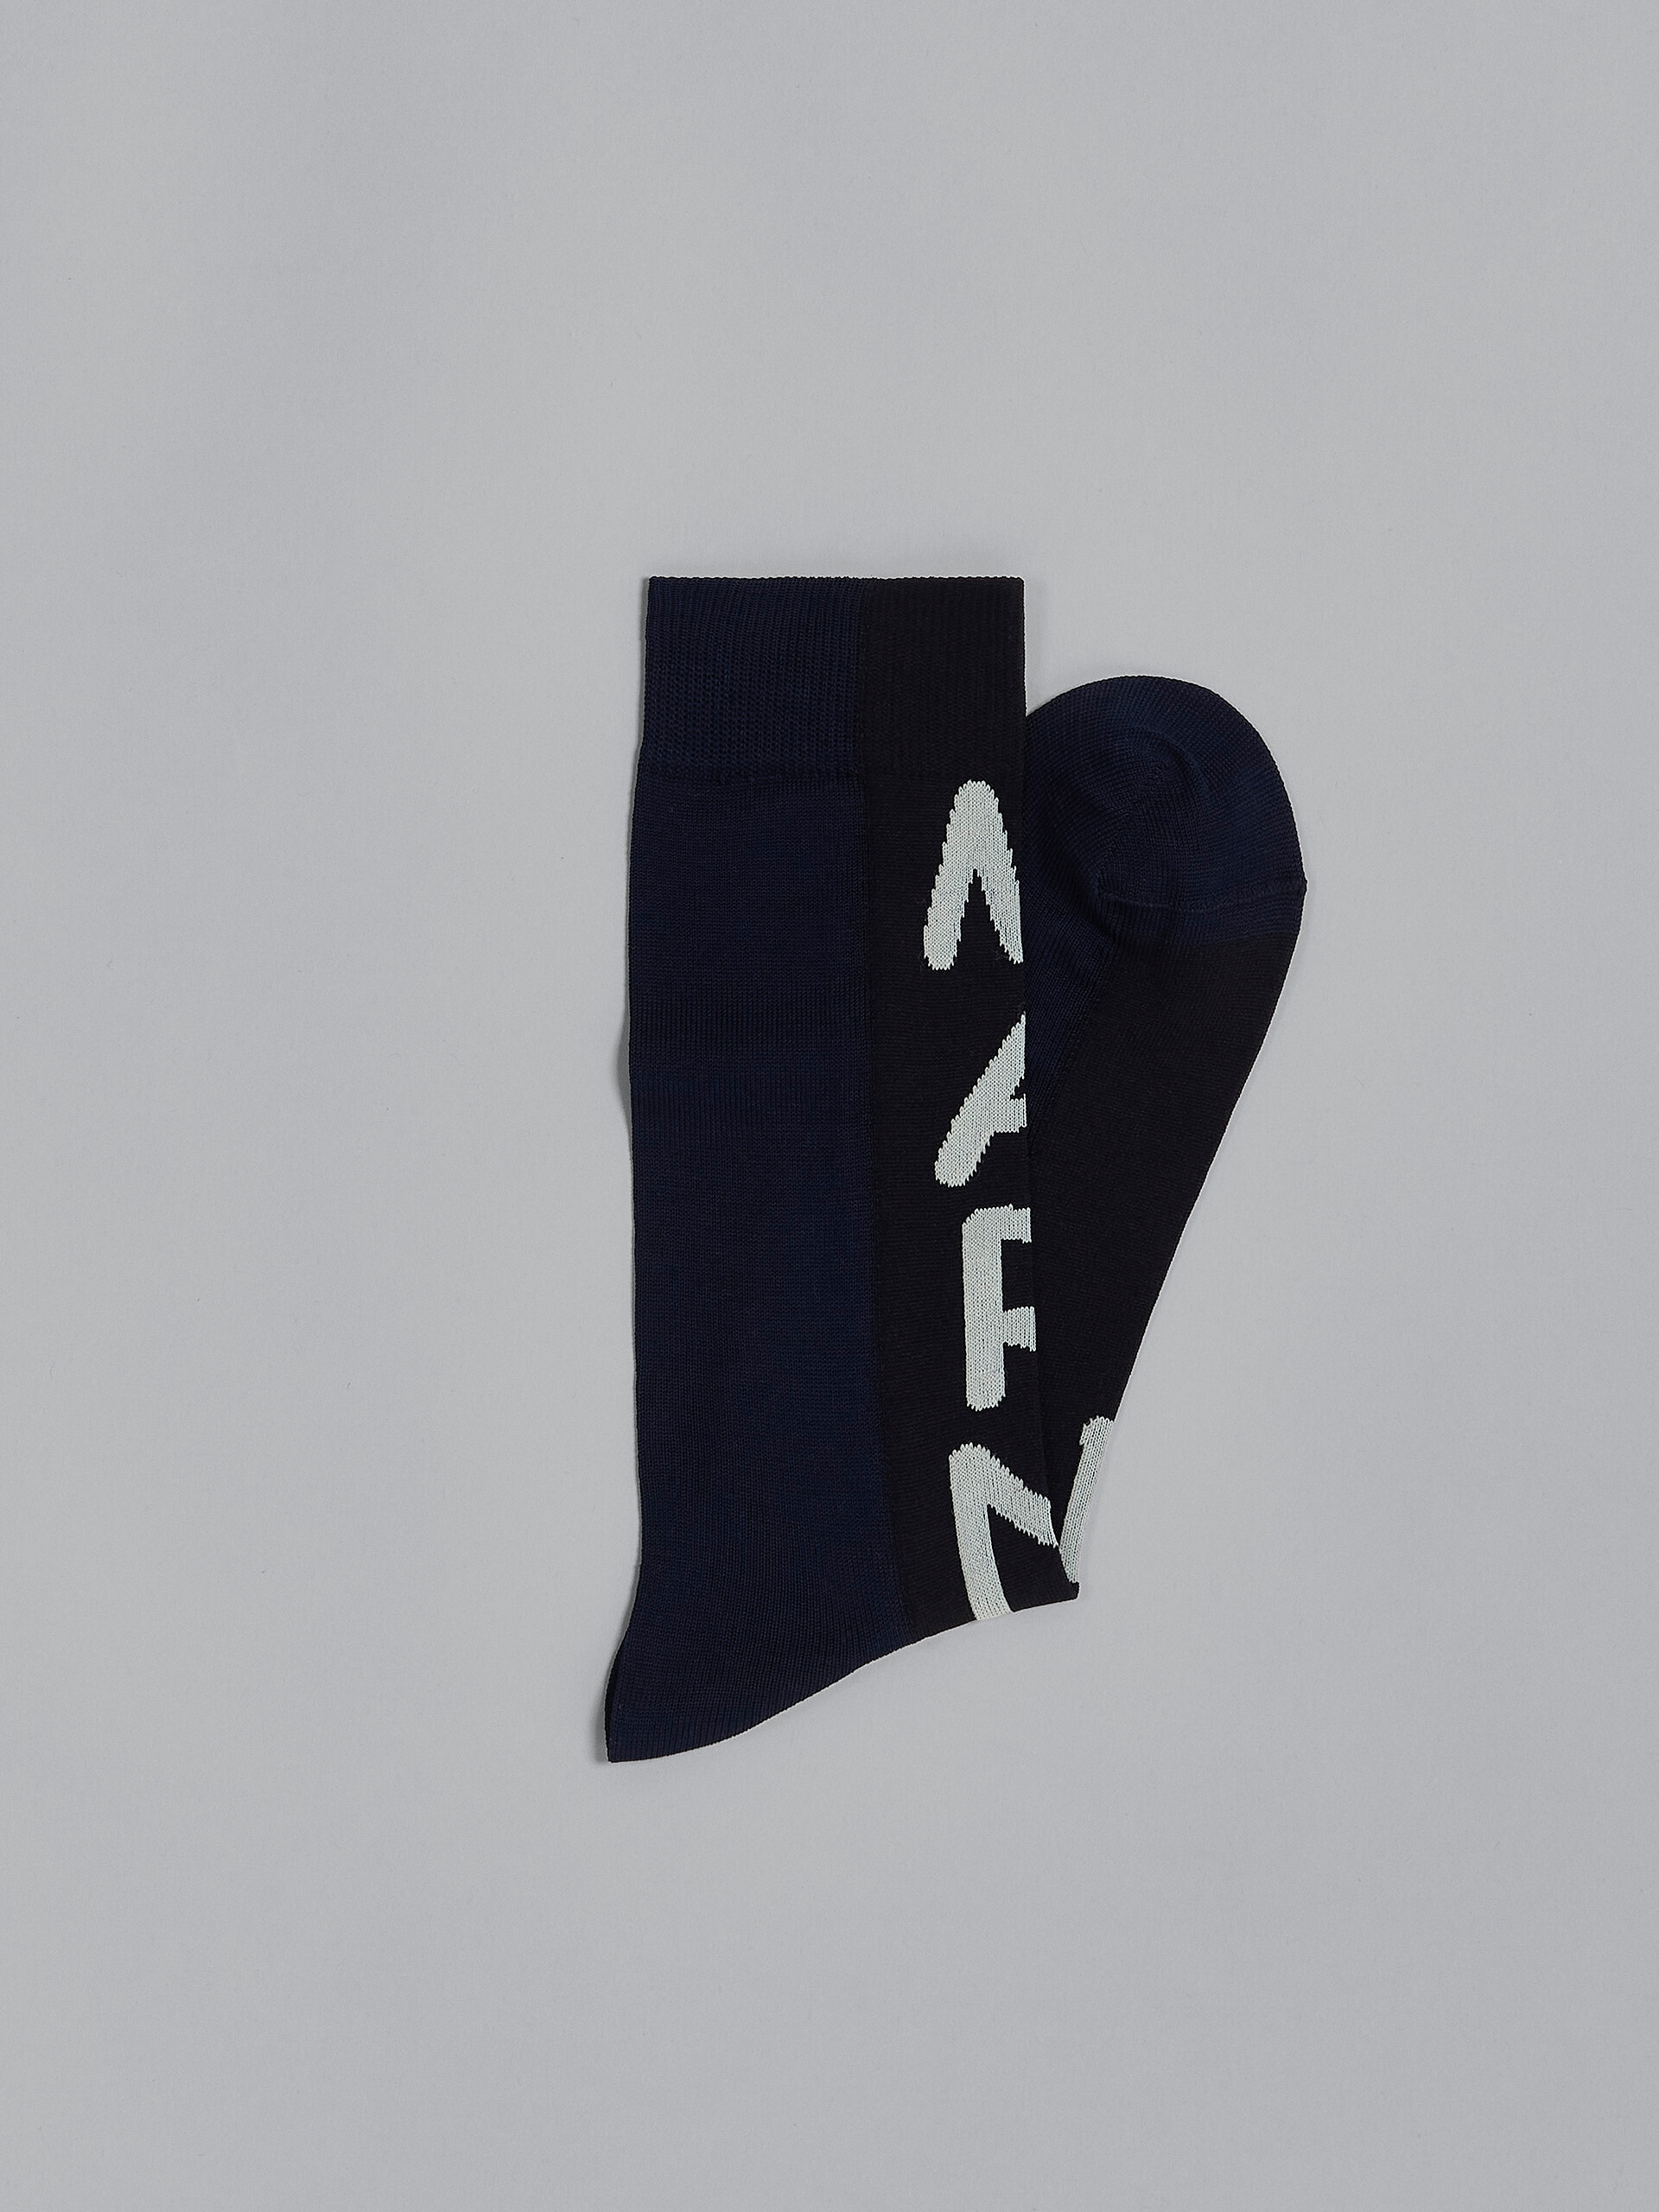 Blue MARNI ON ME cotton and nylon socks - Socks - Image 2